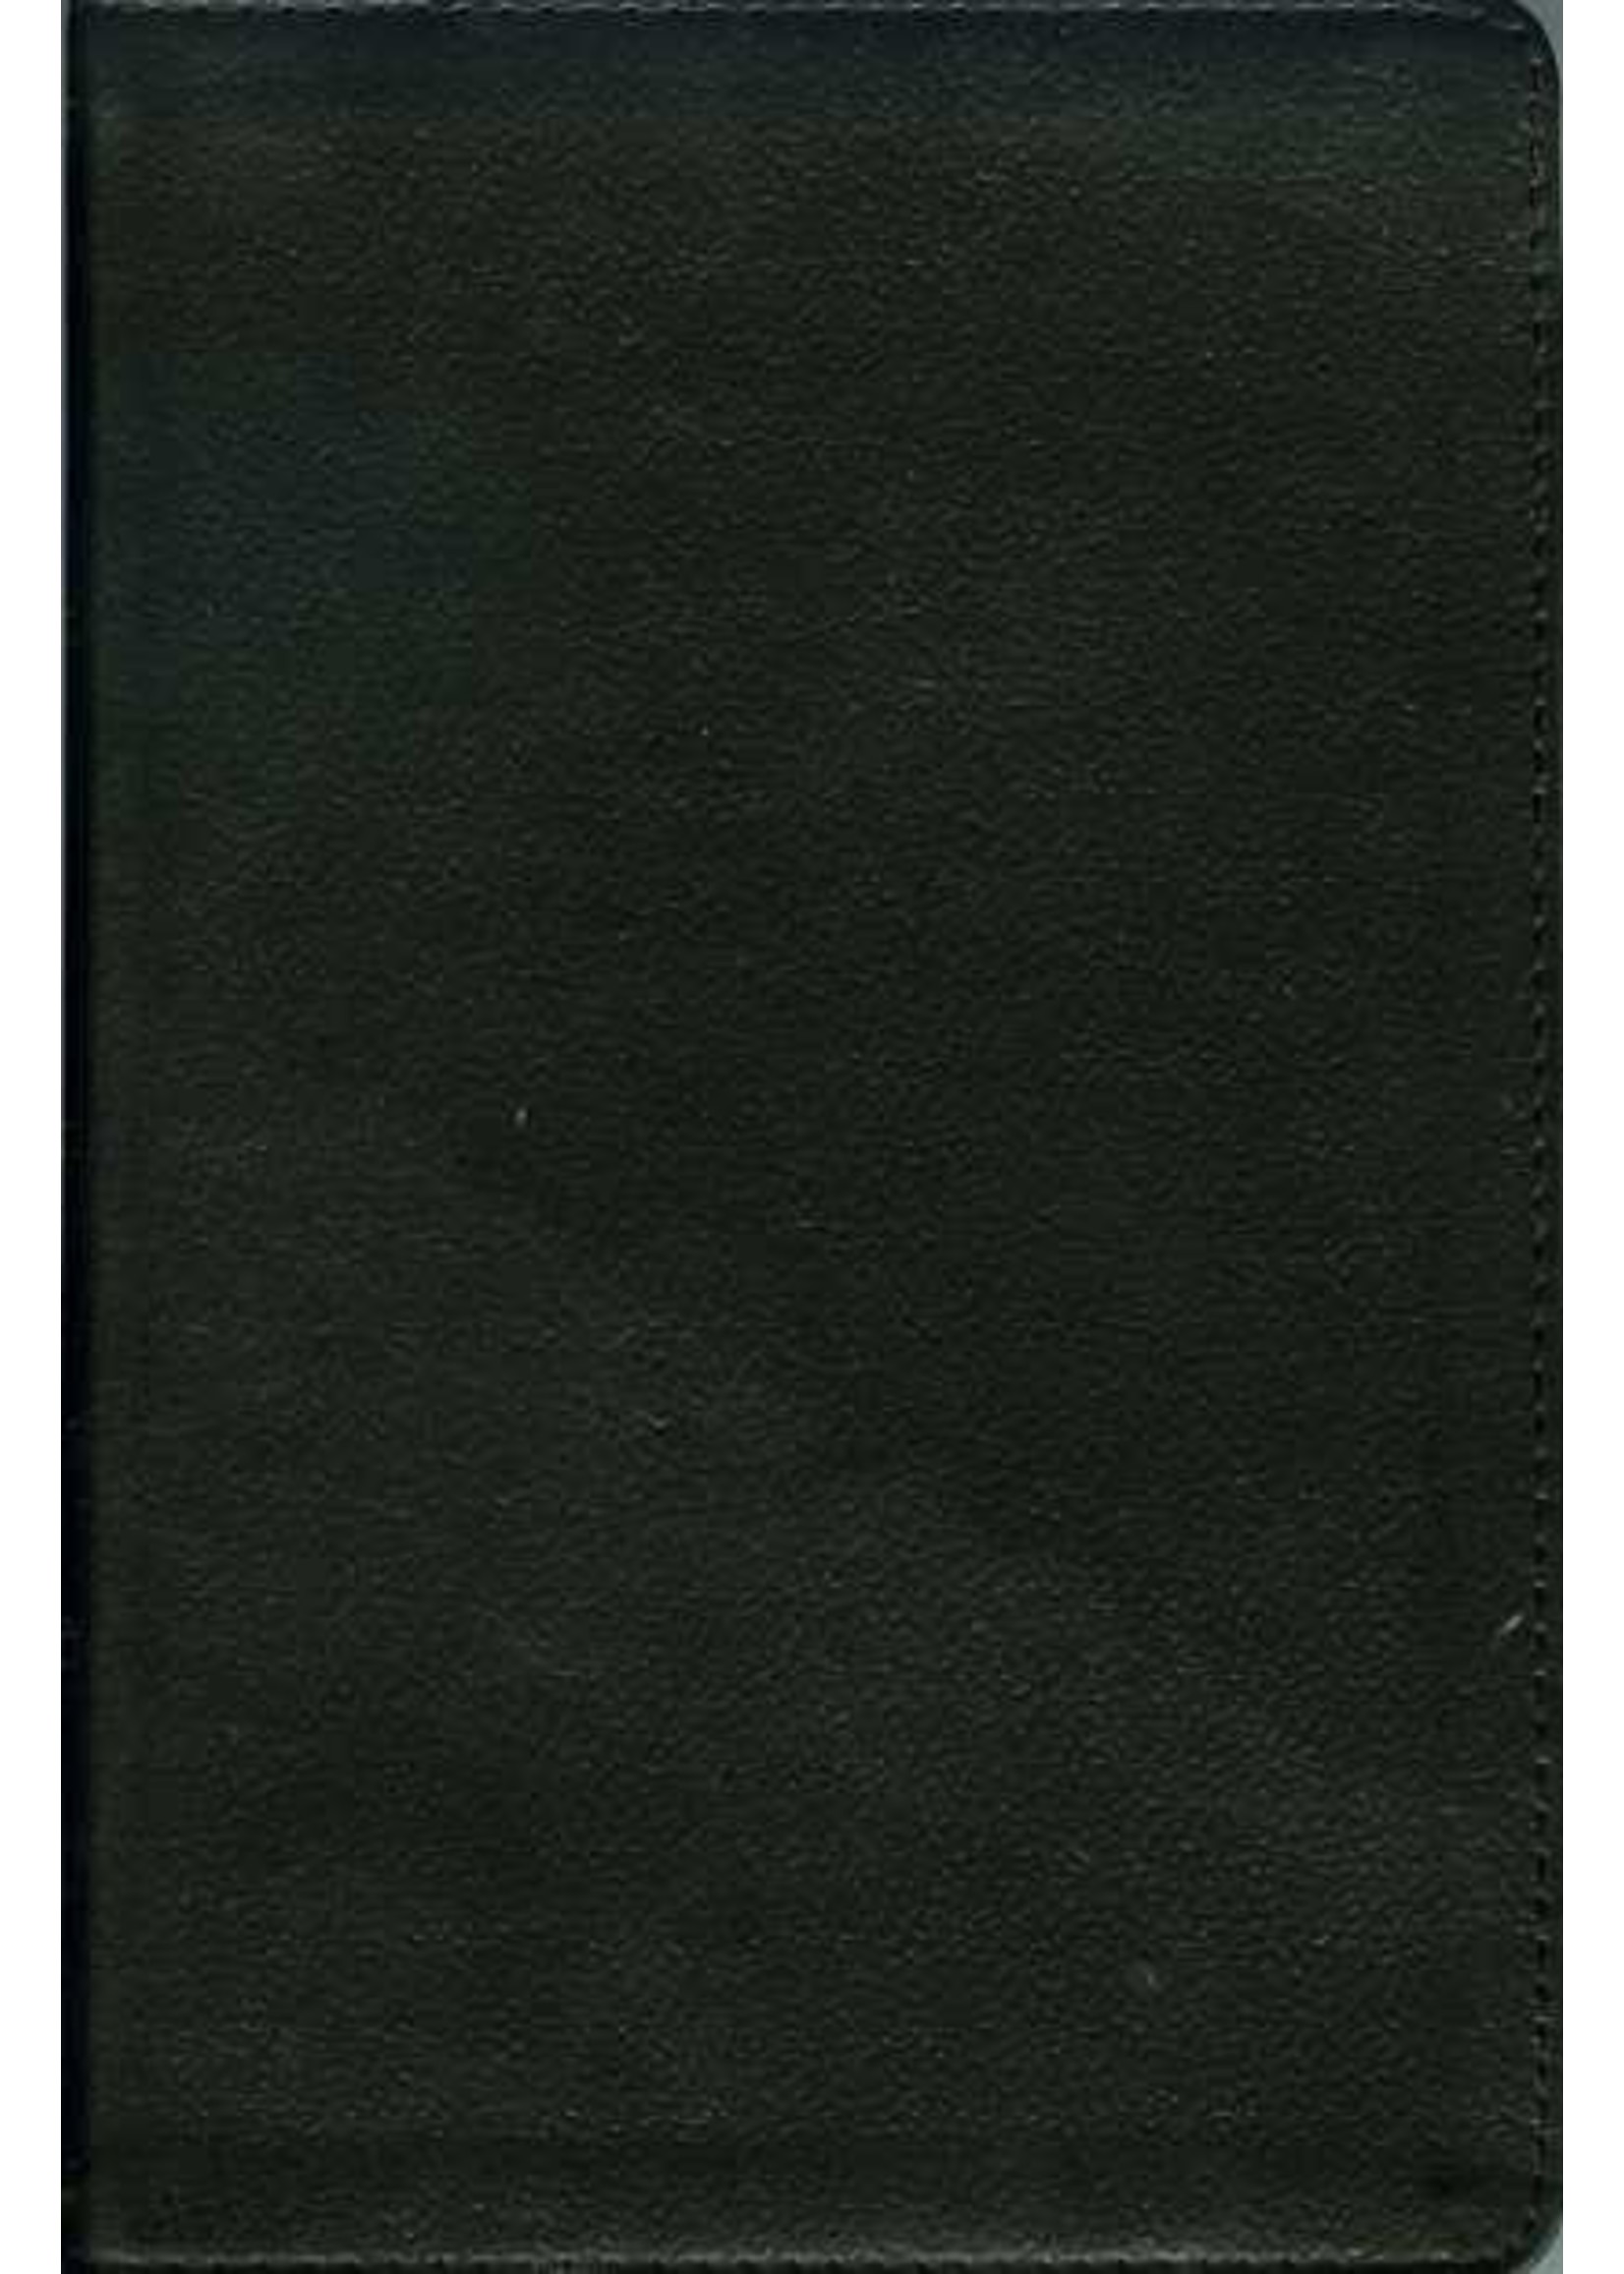 Thomas Nelson NKJV Single Column Reference Bible: Genuine Leather, Black - Thomas Nelson